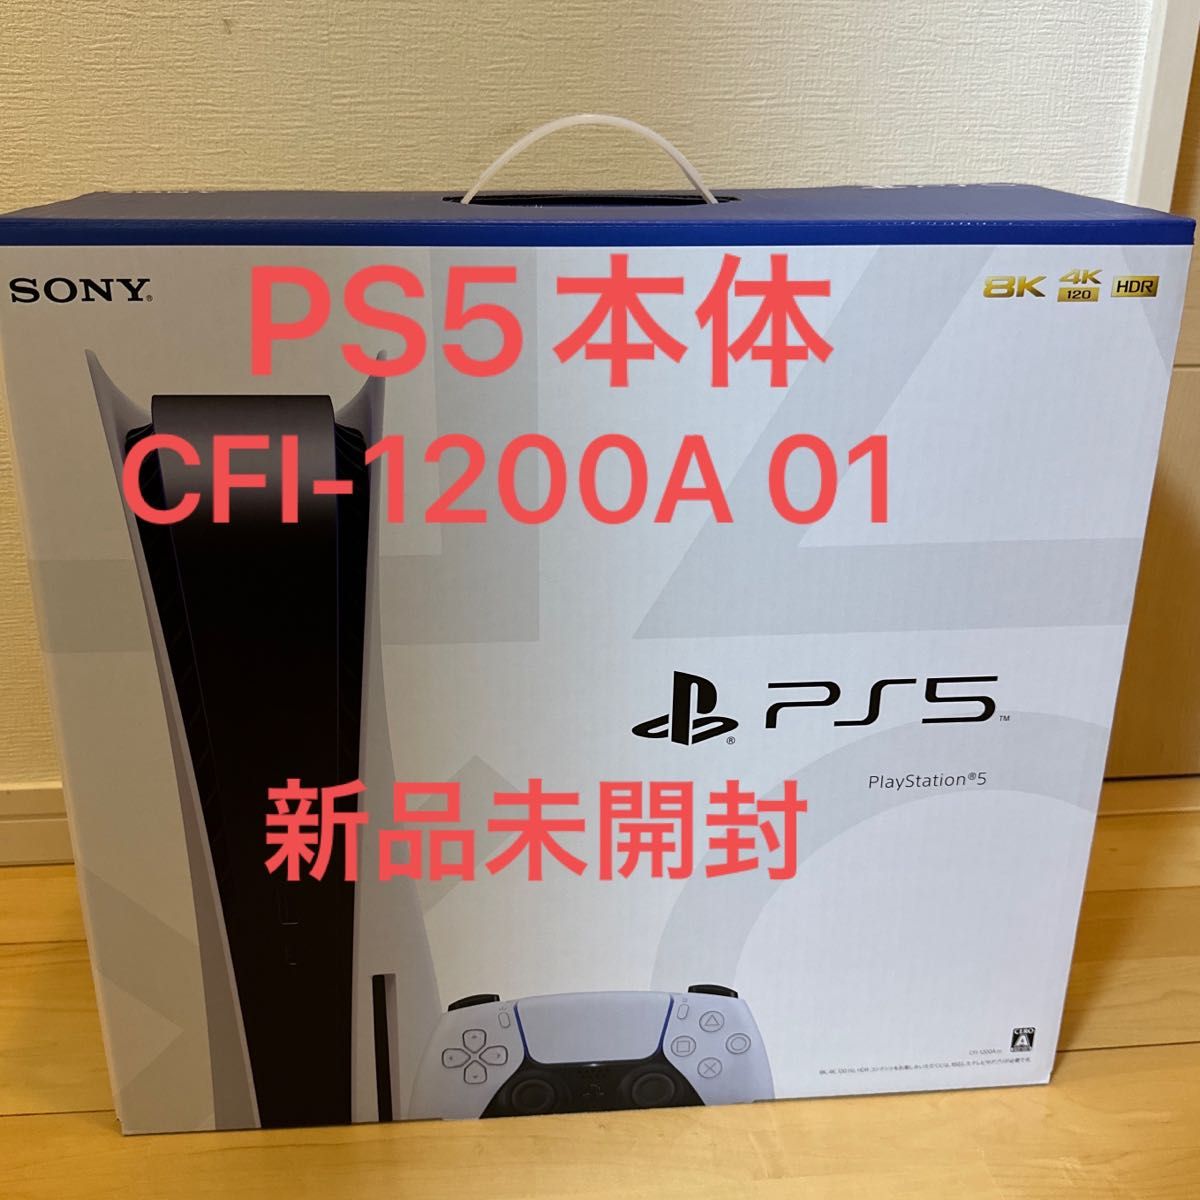 PS5本体 「プレイステーション5」最新型CFI-1200A 01 新品未開封